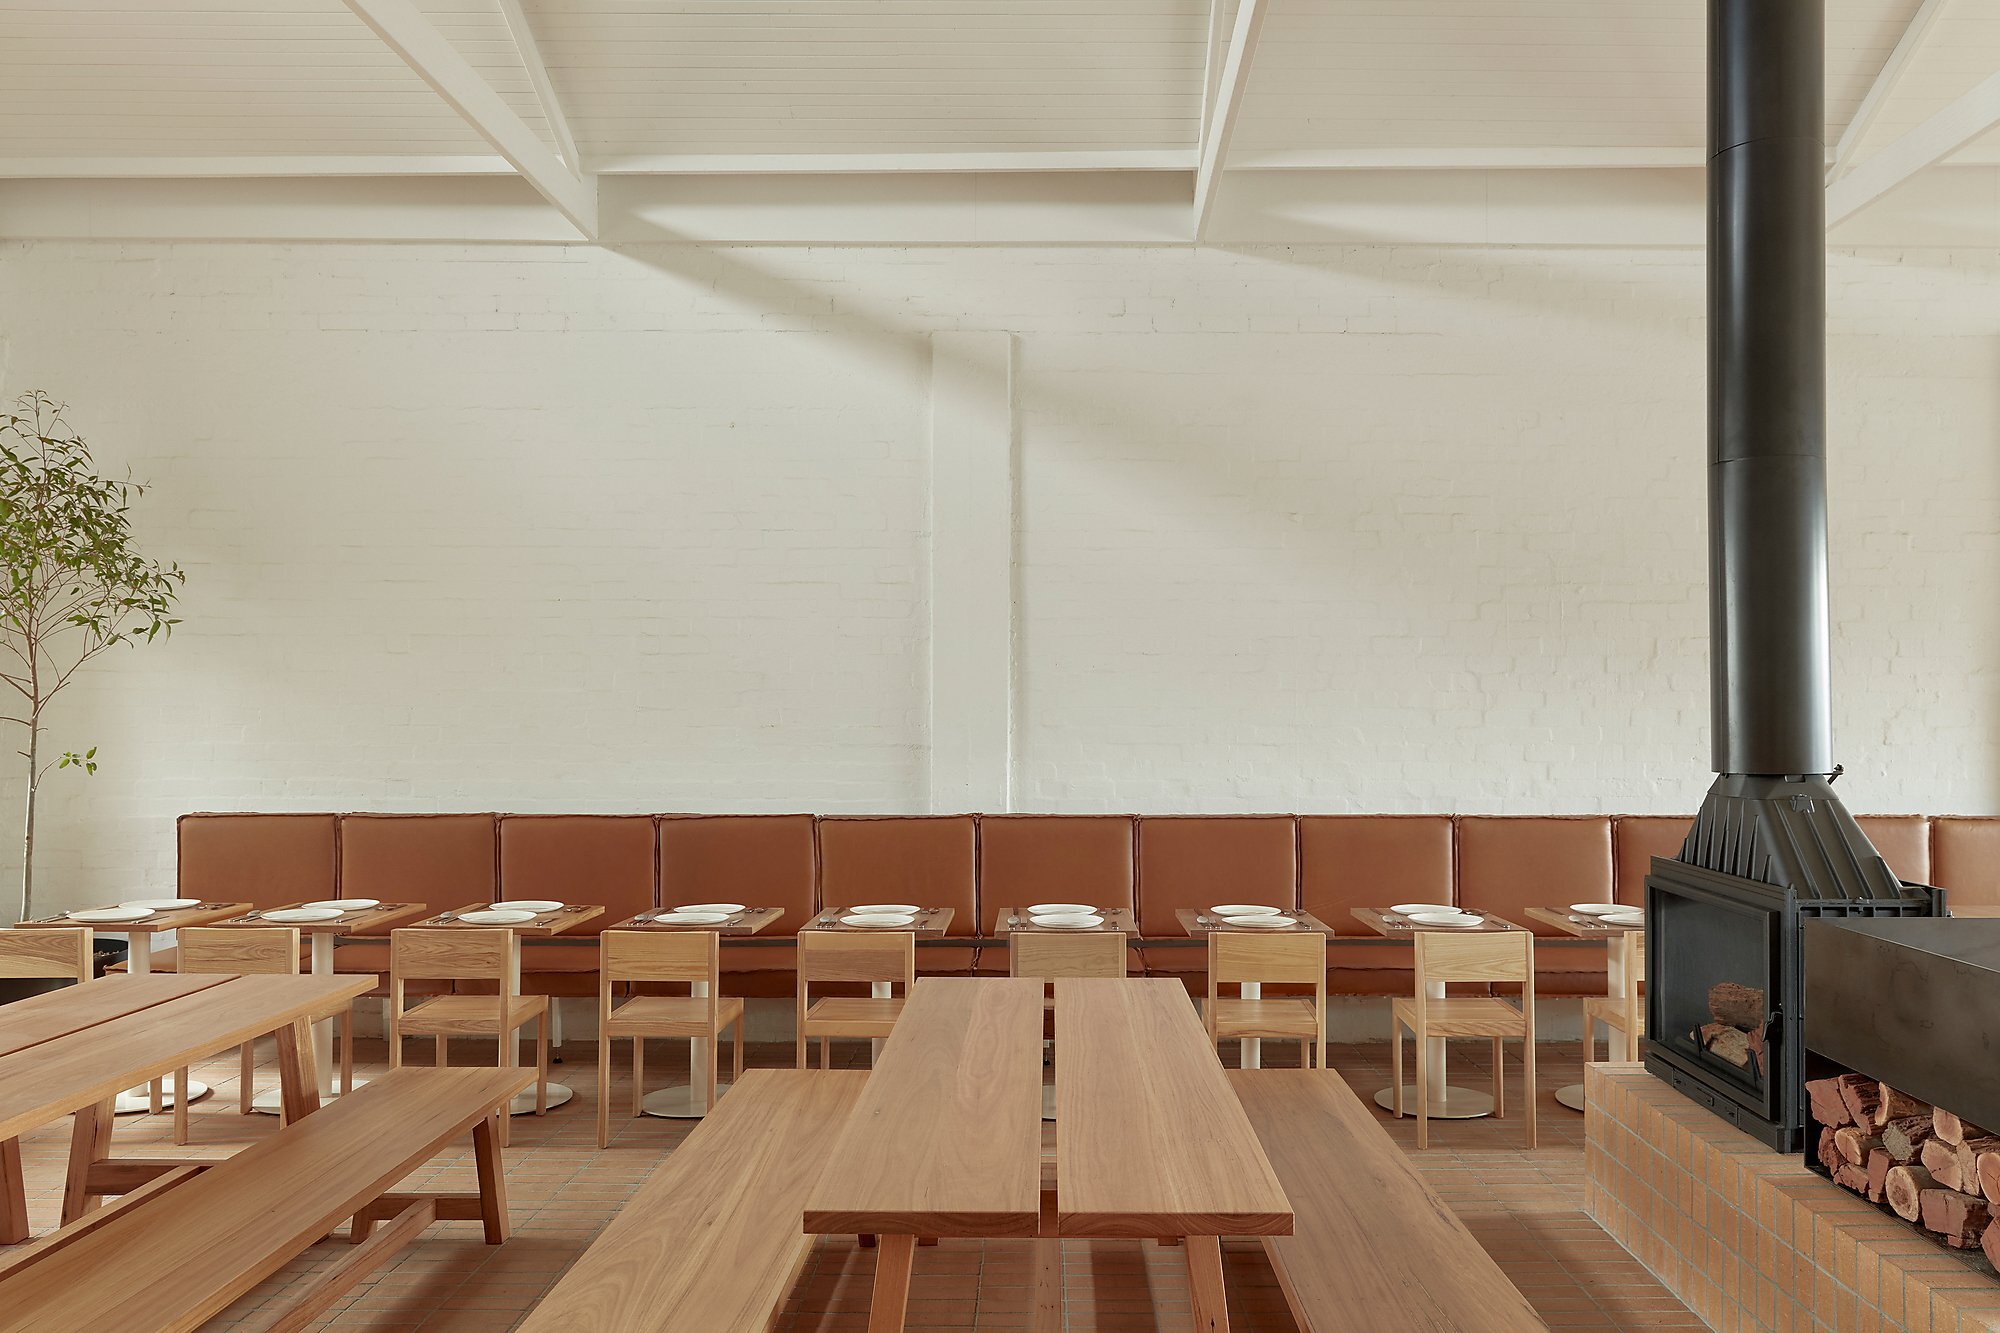 50 Top Restaurants with beautiful Interior Design - RTF